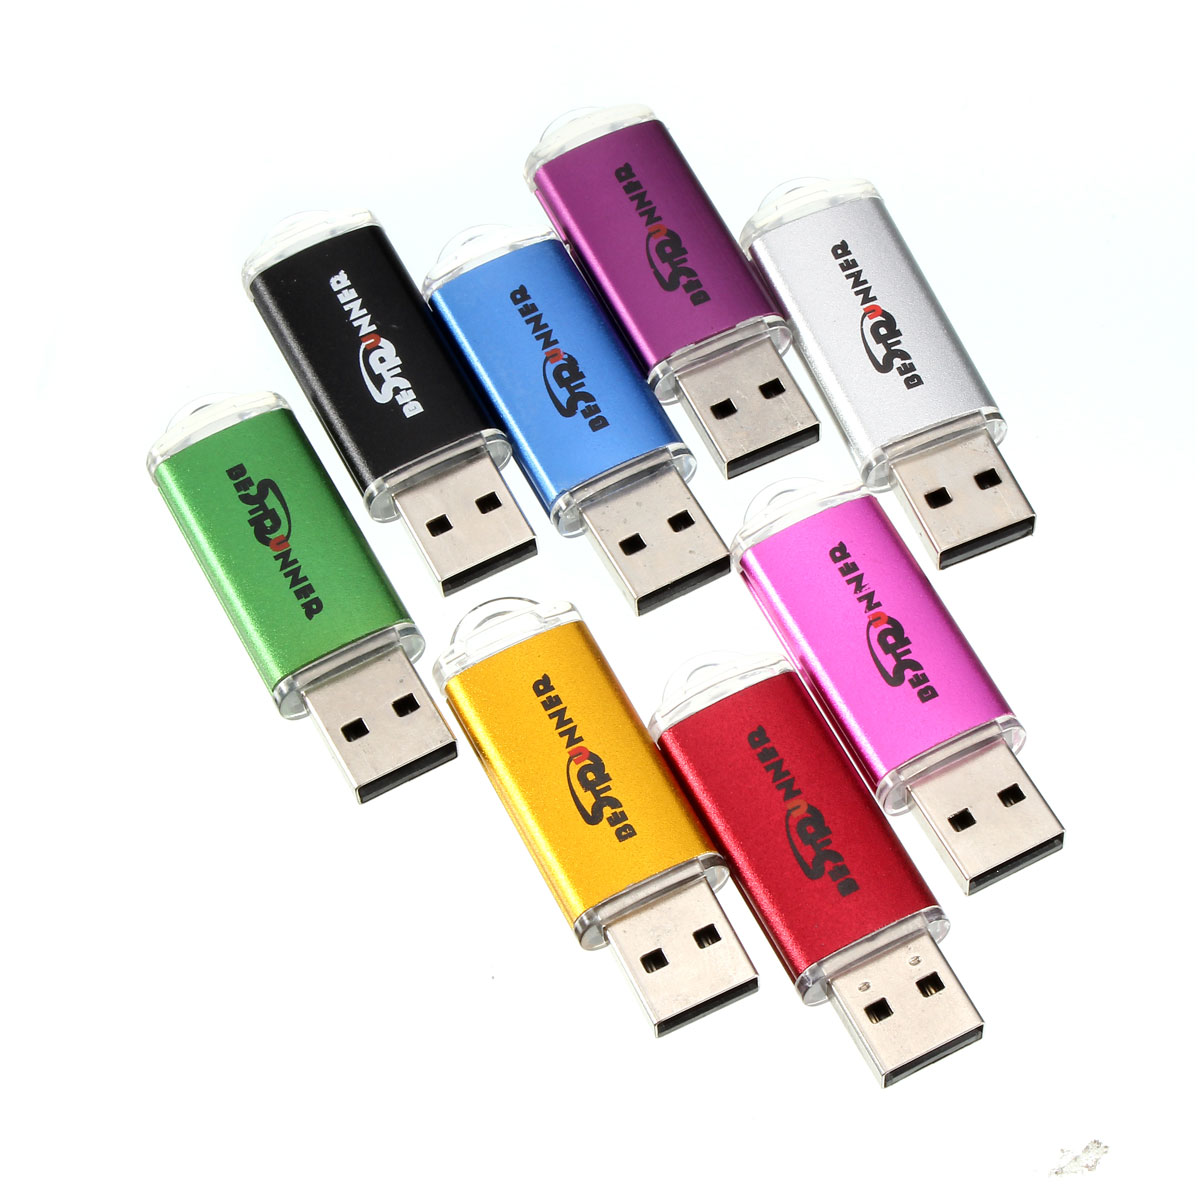 Bestrunner-Multi-Color-Portable-USB-20-1GB960M-Pendrive-USB-Disk-for-Macbook-Laptop-PC-1723018-4